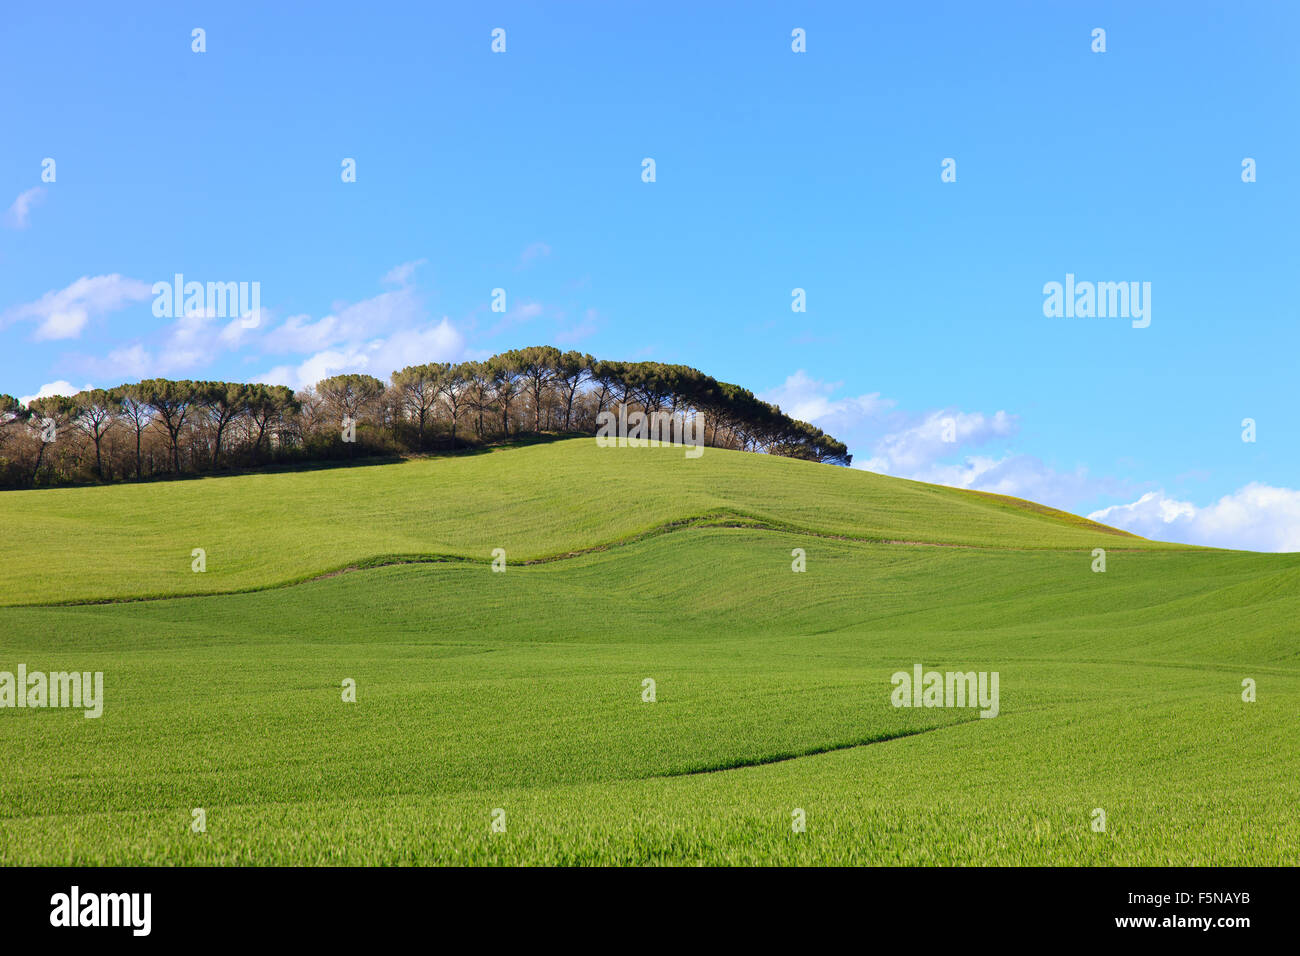 Toskana, Crete Senesi Land Landschaft, Italien, Europa. Sanfte Hügel, grüne, hügelige Felder, Pinien in einer Reihe, blauer Himmel Stockfoto